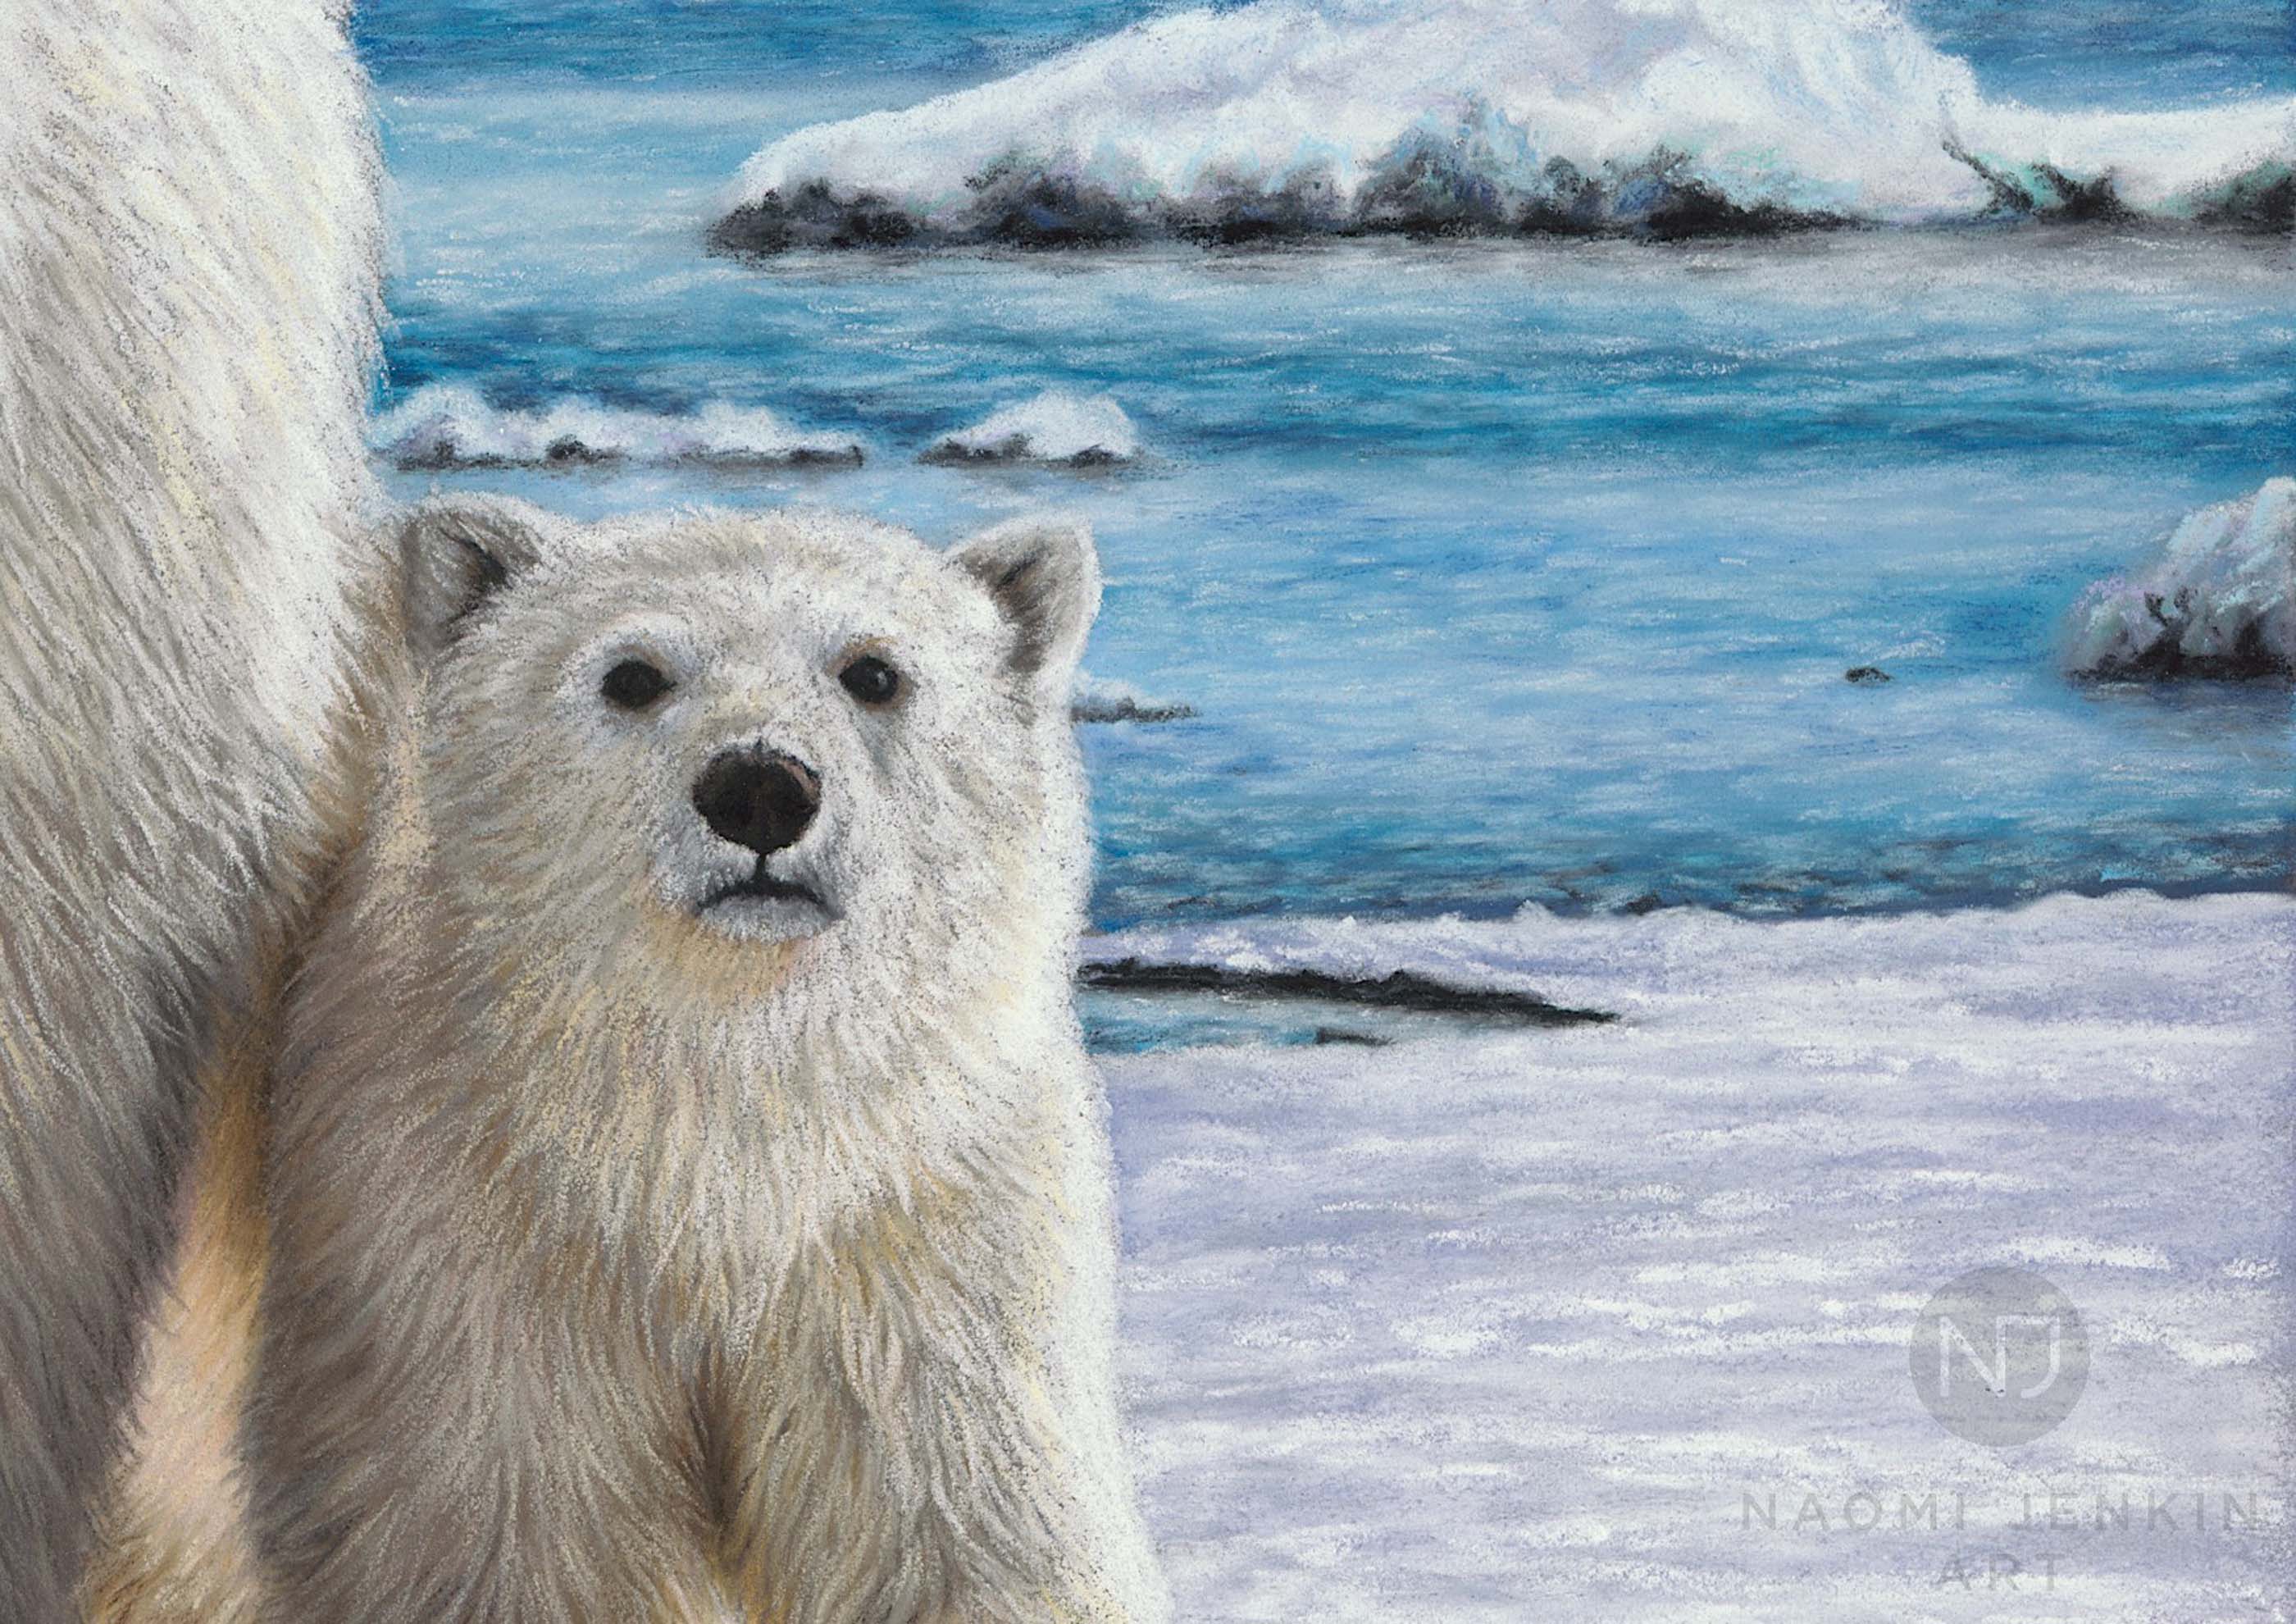 Close up of polar bear art by UK wildlife artist Naomi Jenkin.